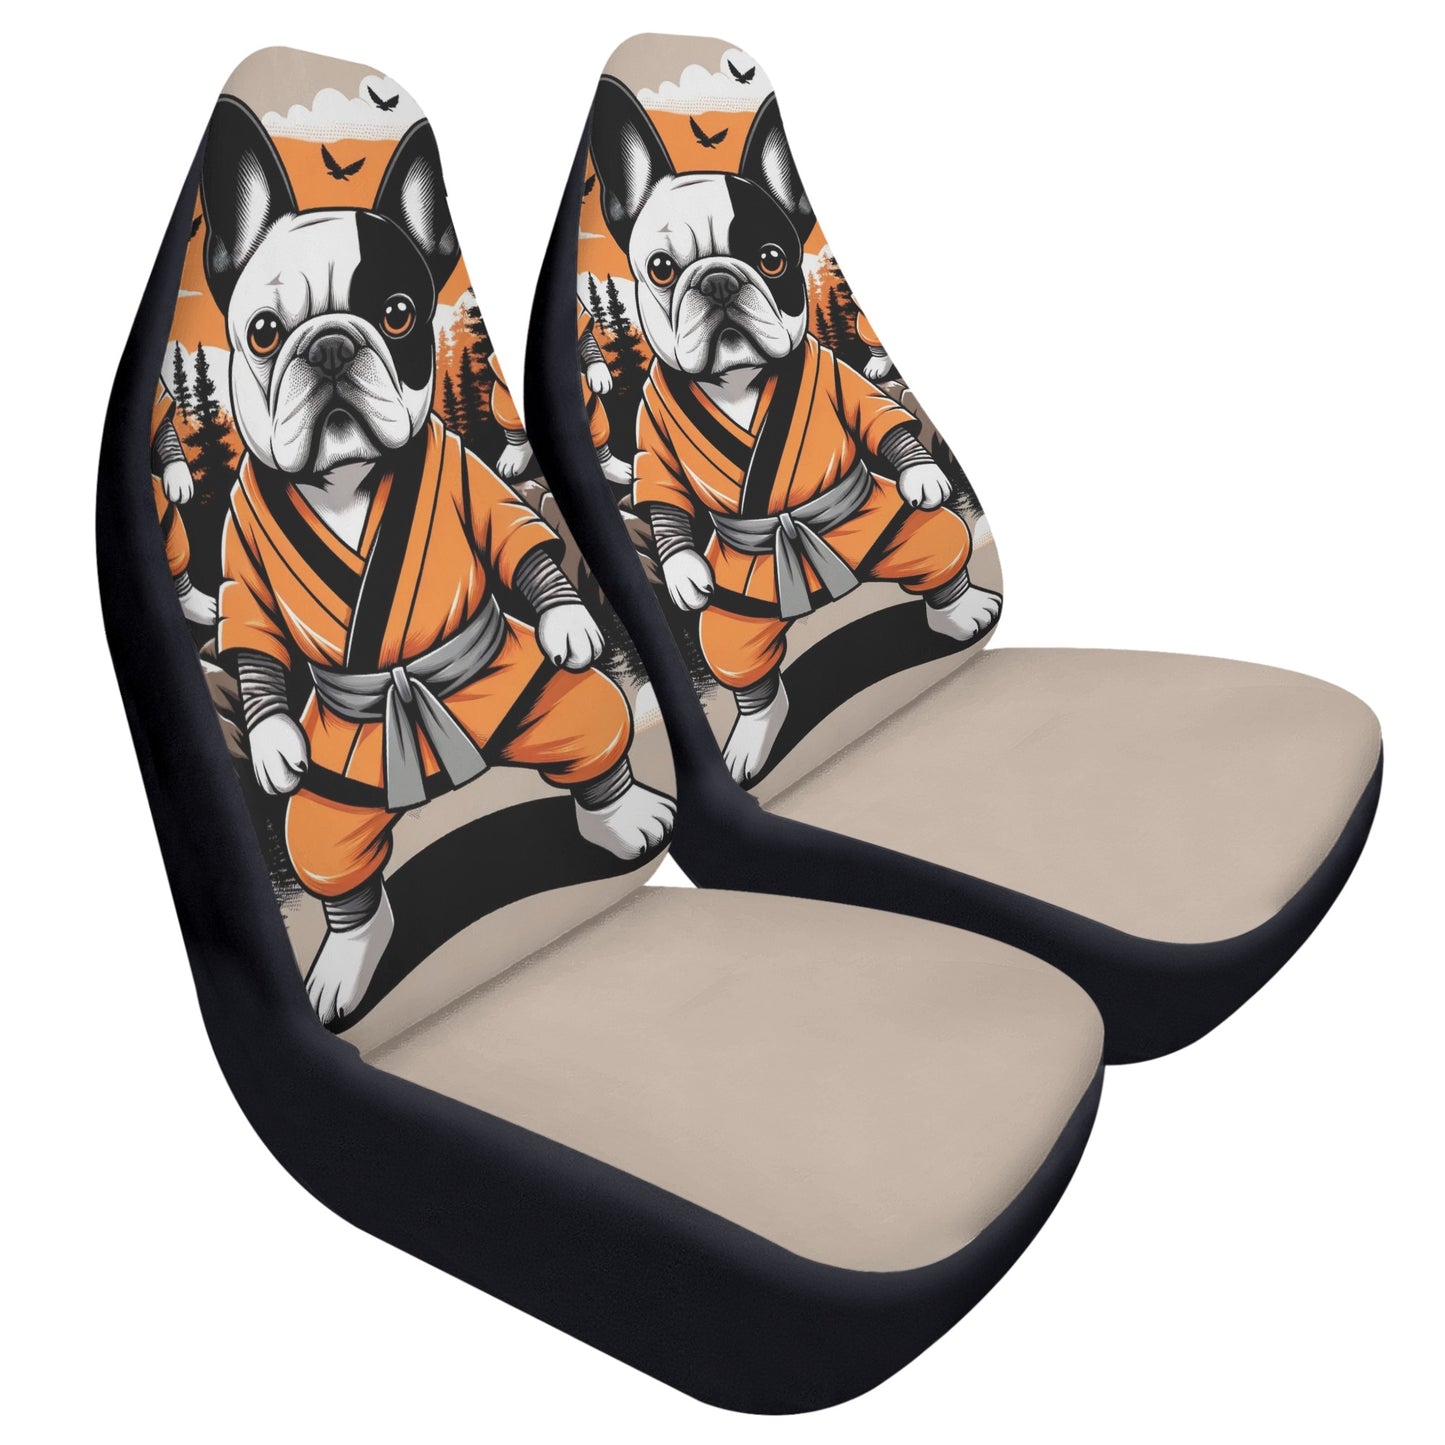 Warrior - Car seat covers (2 pcs)